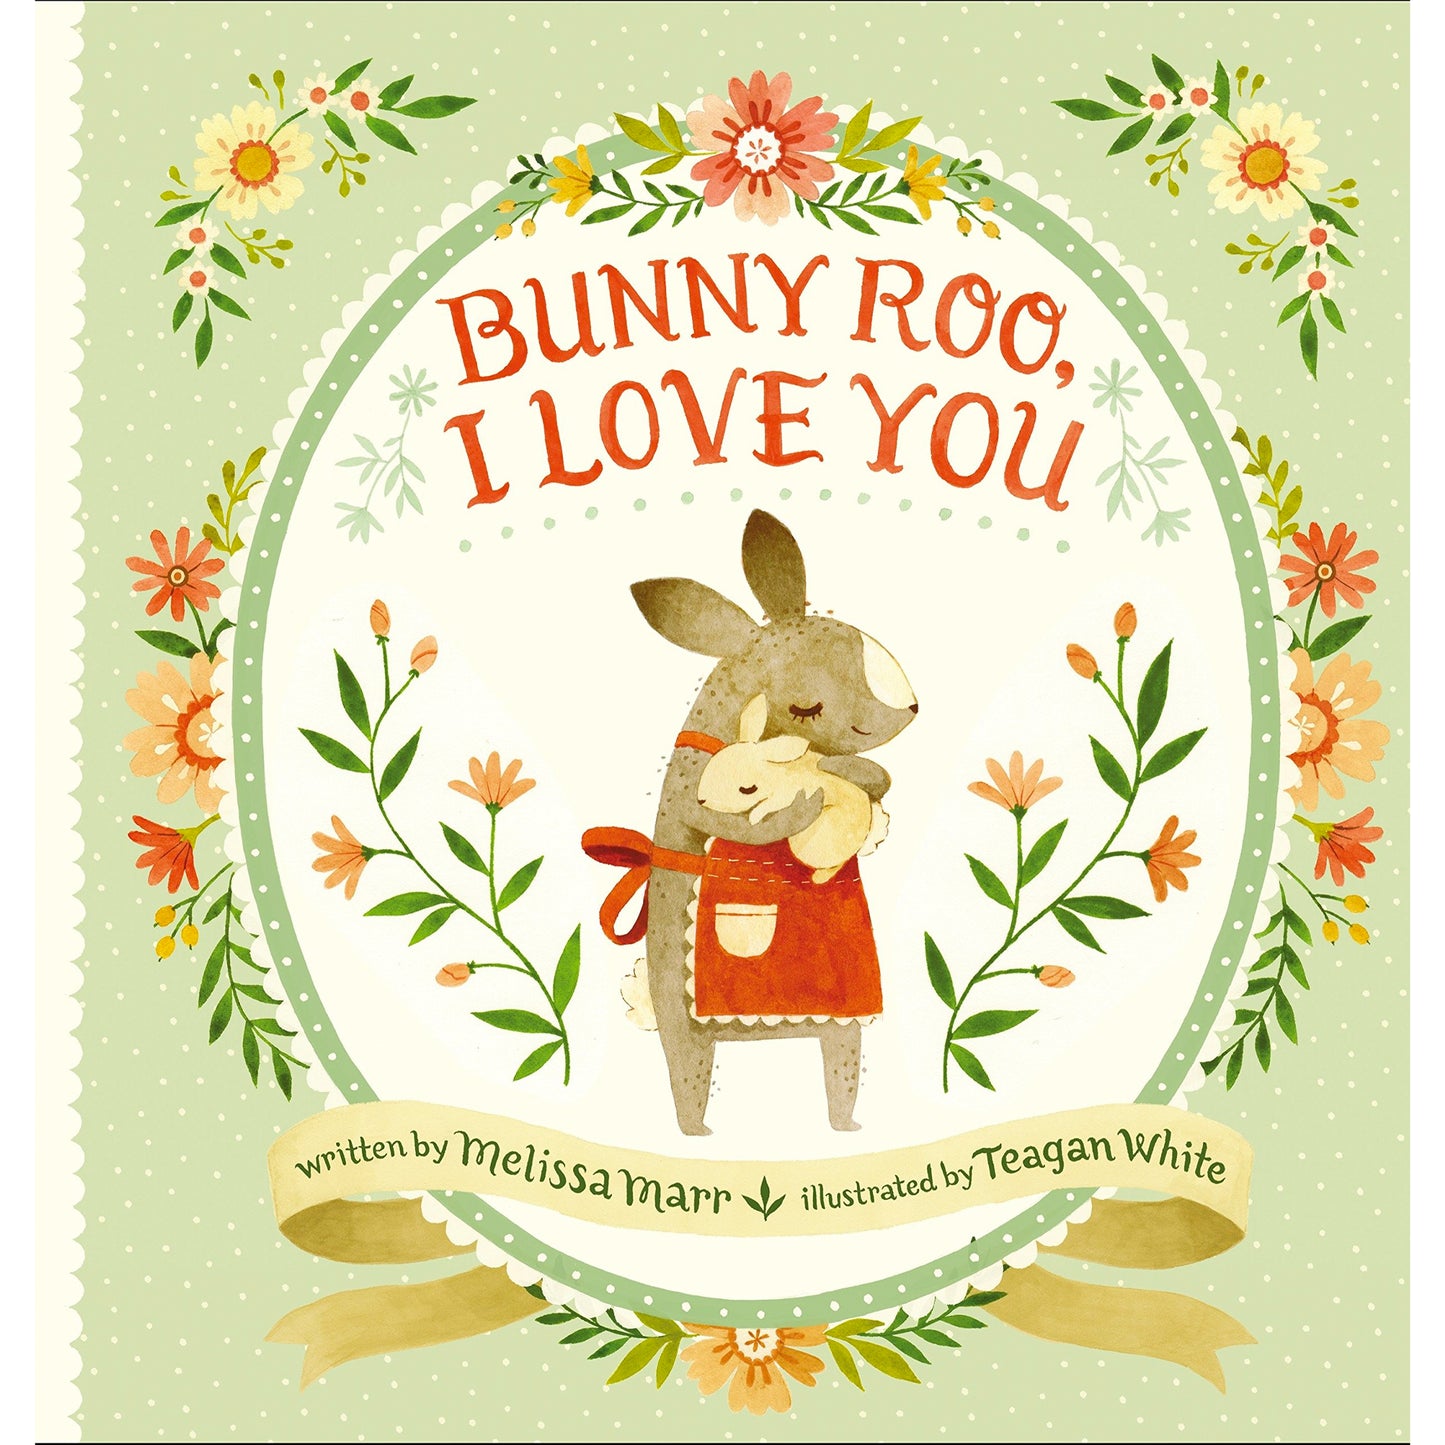 Bunny Roo, I Love You Book